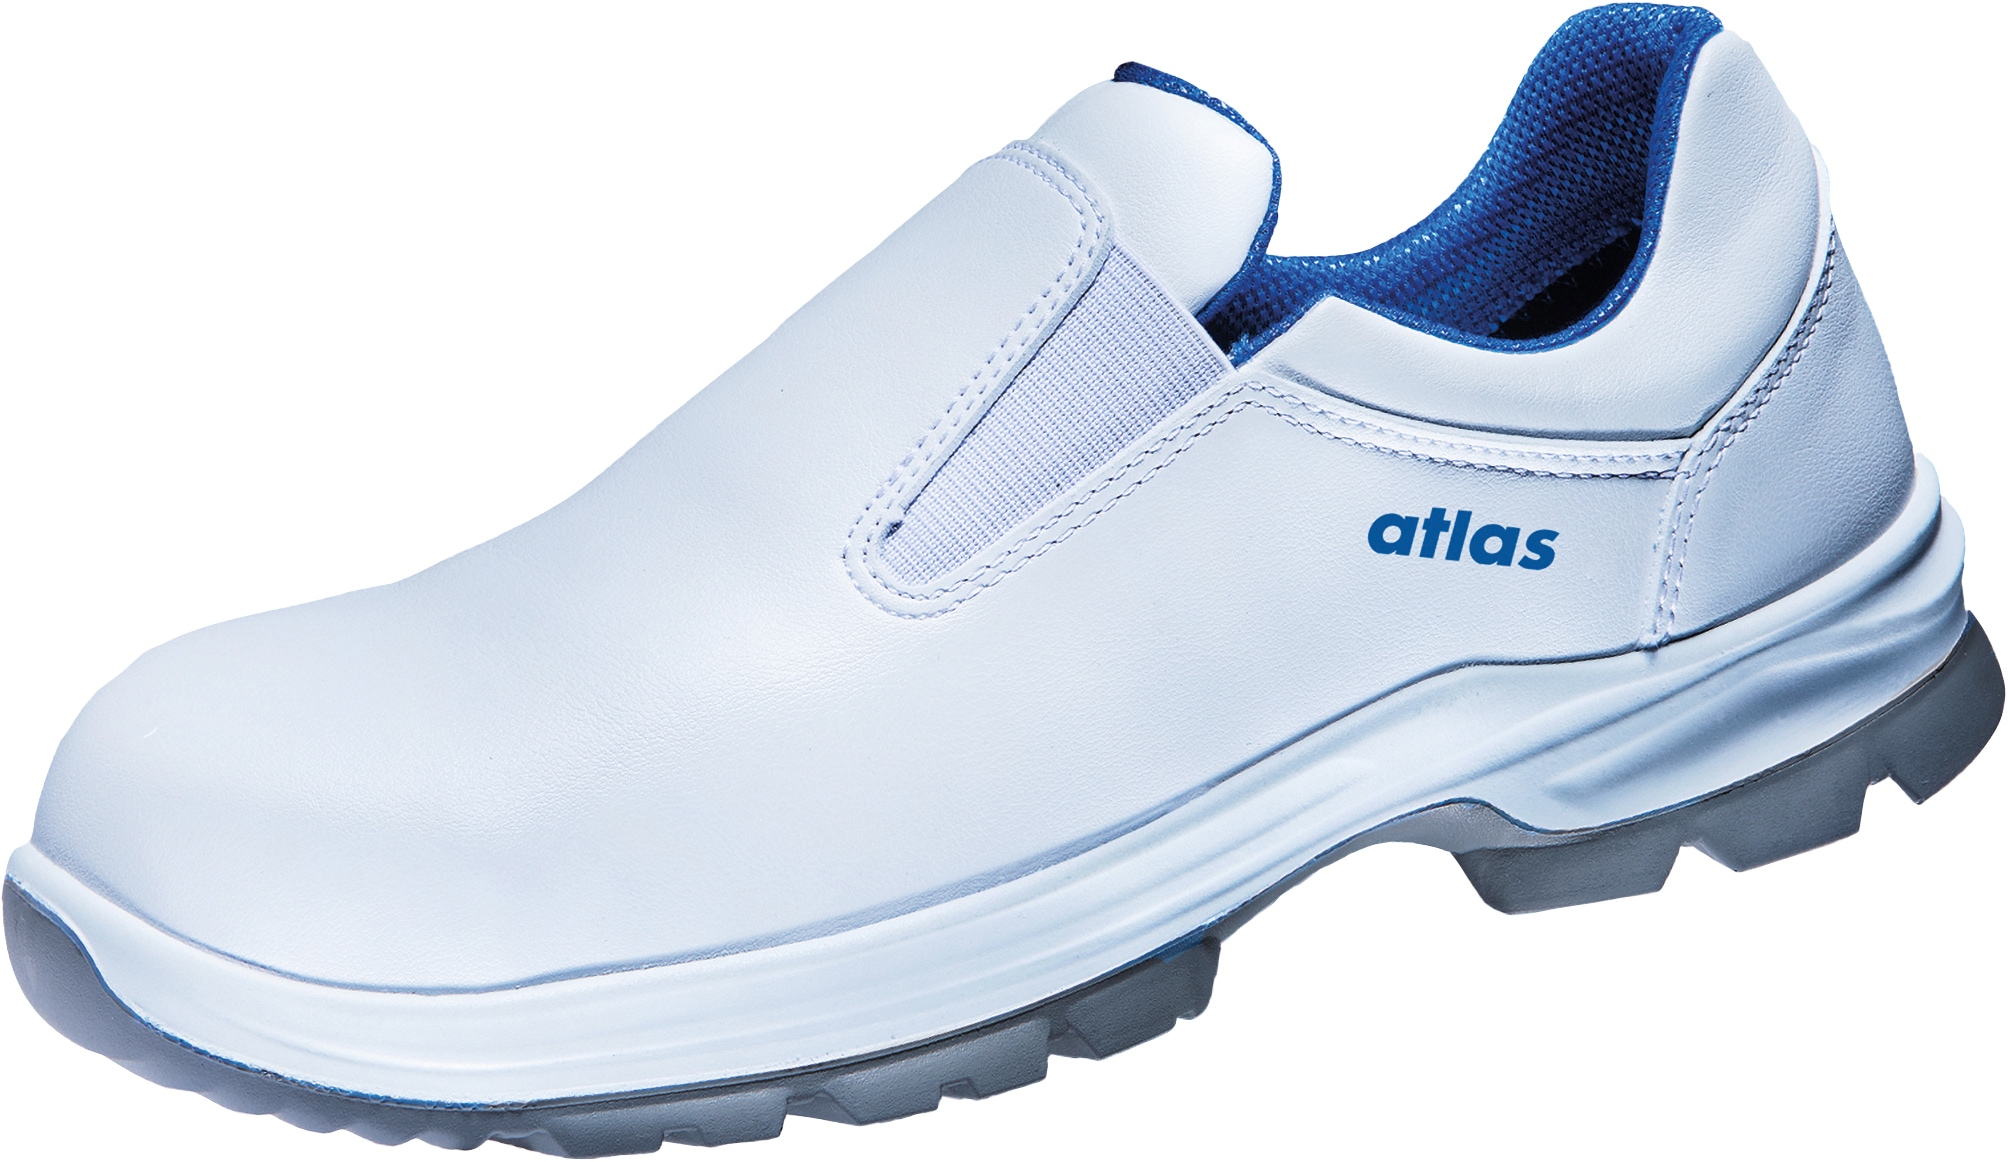 Atlas Schuhe Arbeitsschuh »Sneaker CL 490 2.0 ESD«, S2 kaufen bei OTTO